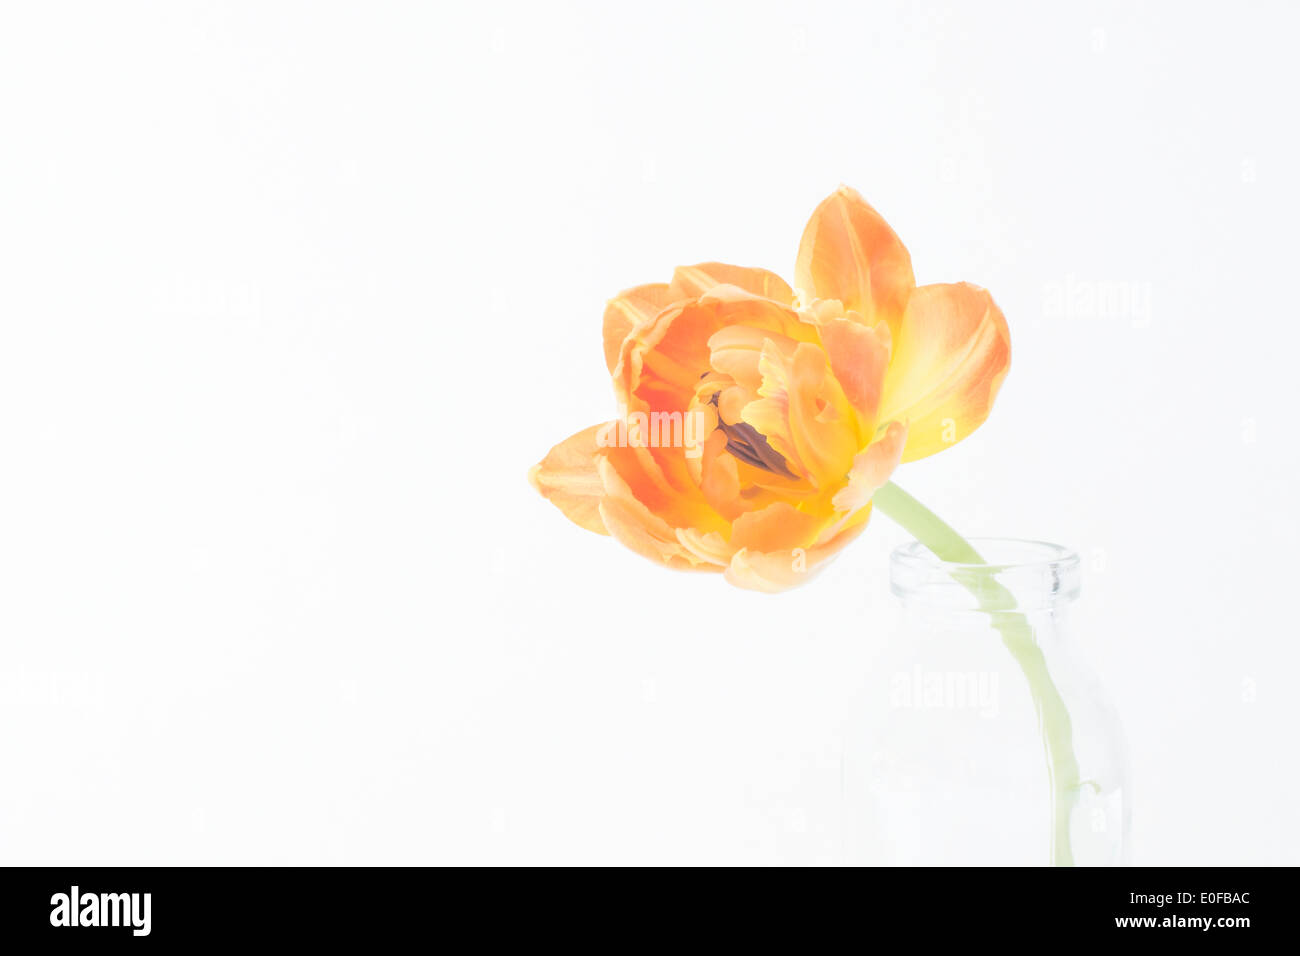 Single tulip, a photograph of a orange tulip. Stock Photo